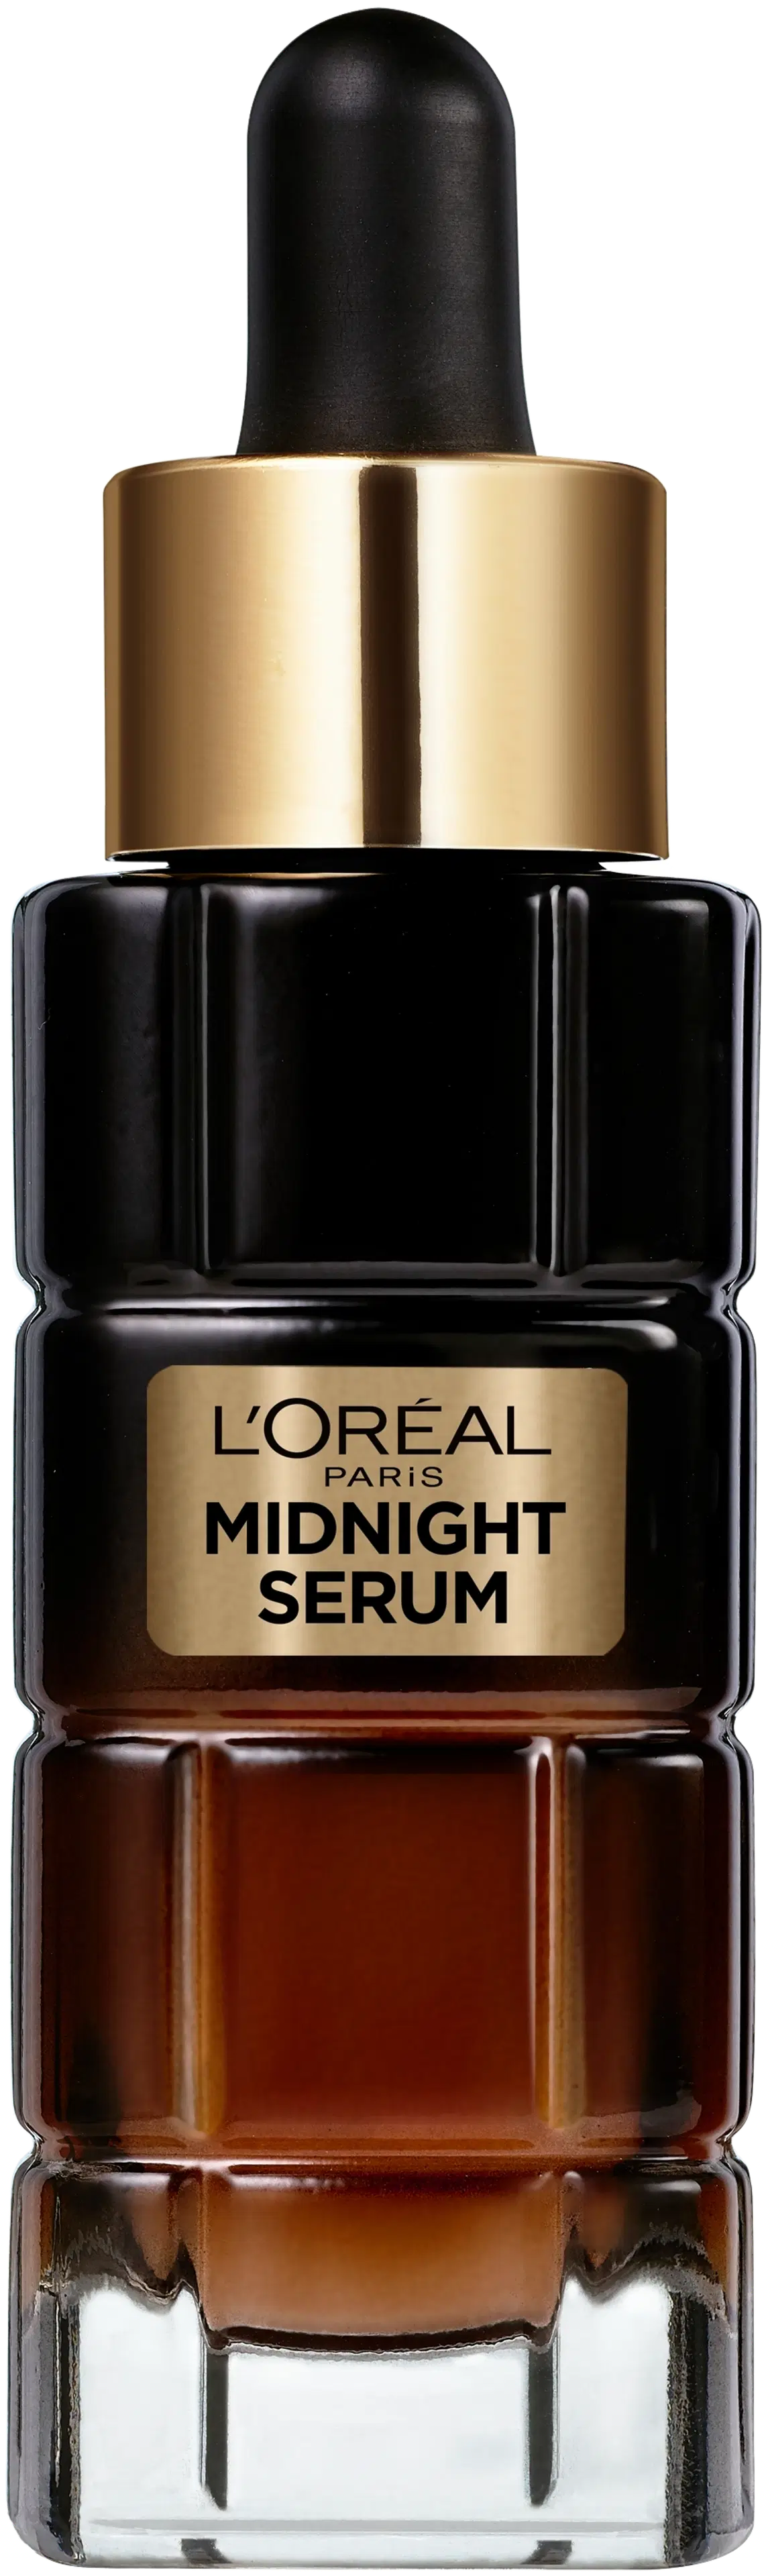 L'Oréal Paris Age Perfect Cell Renewal Midnight Serum heleyttävä yöseerumi 30 ml